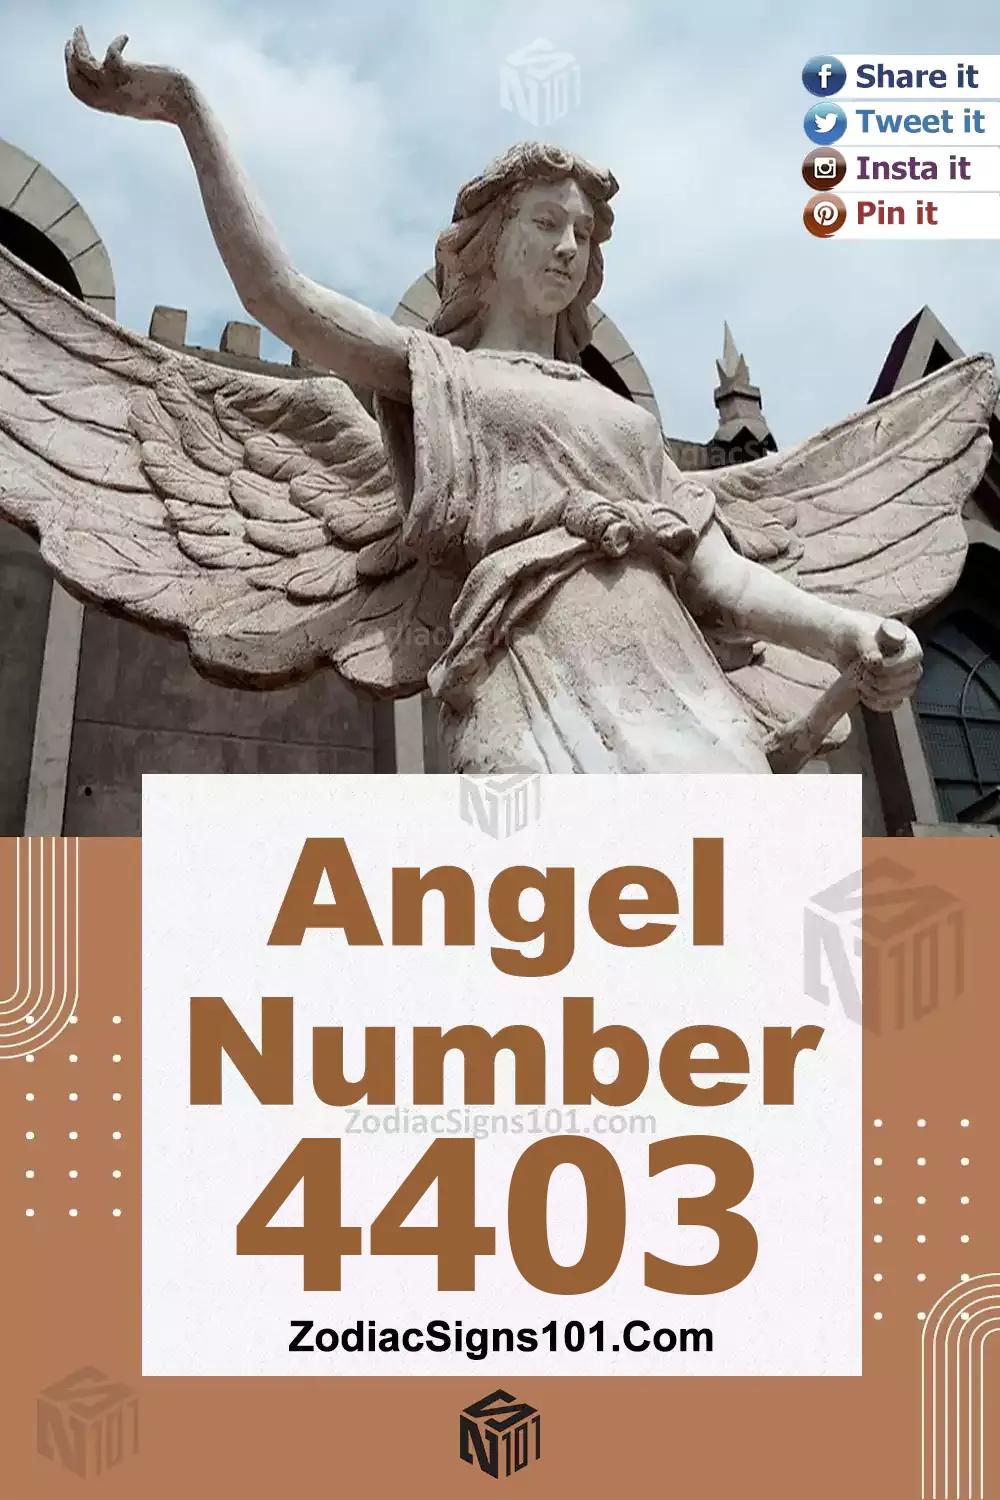 4403-Angel-Number-Meaning.jpg